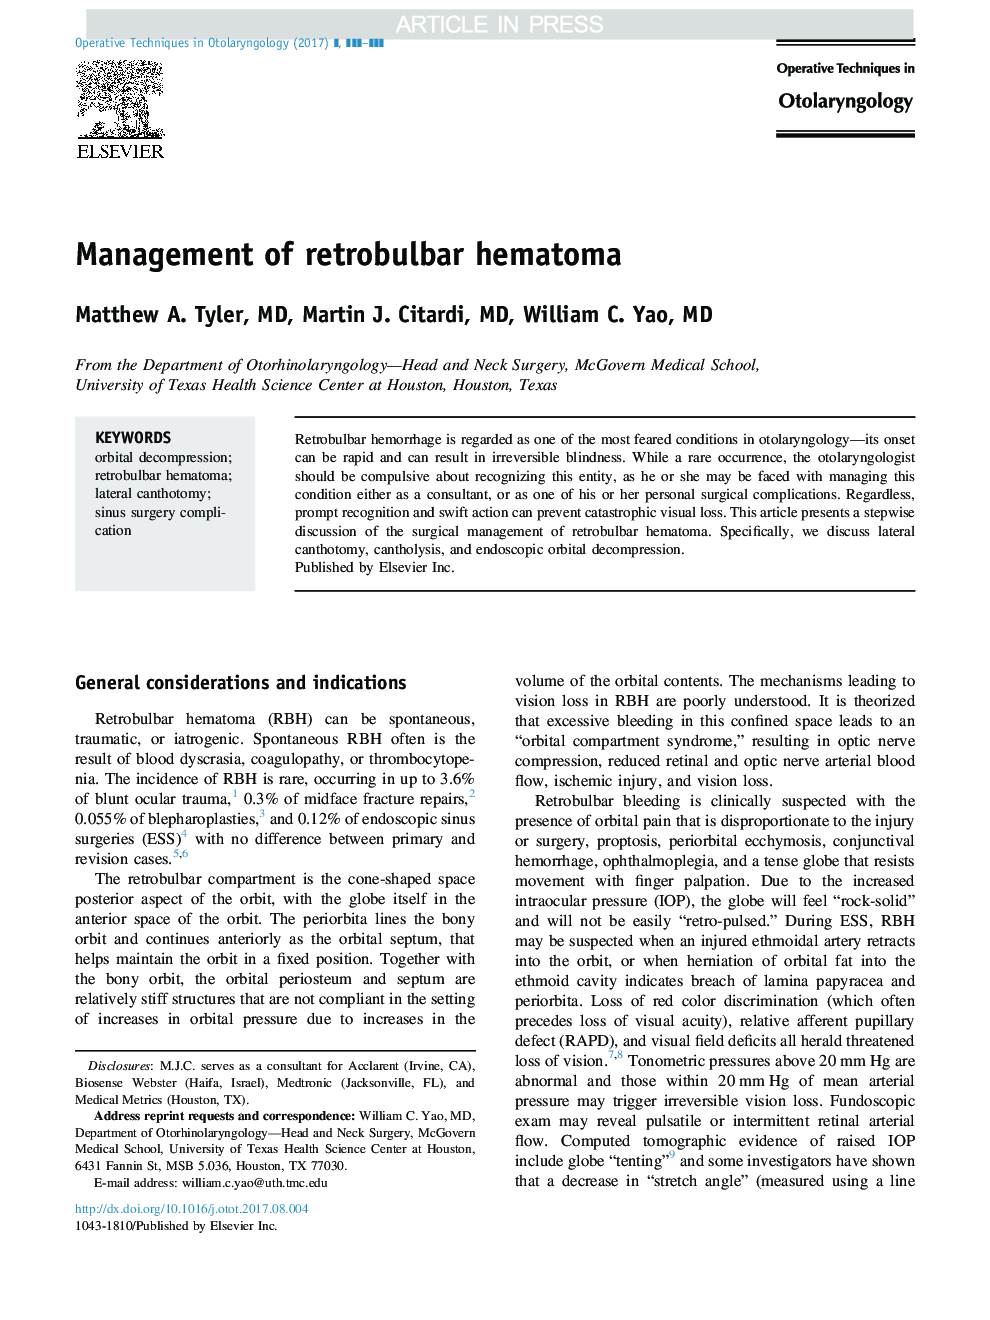 Management of retrobulbar hematoma